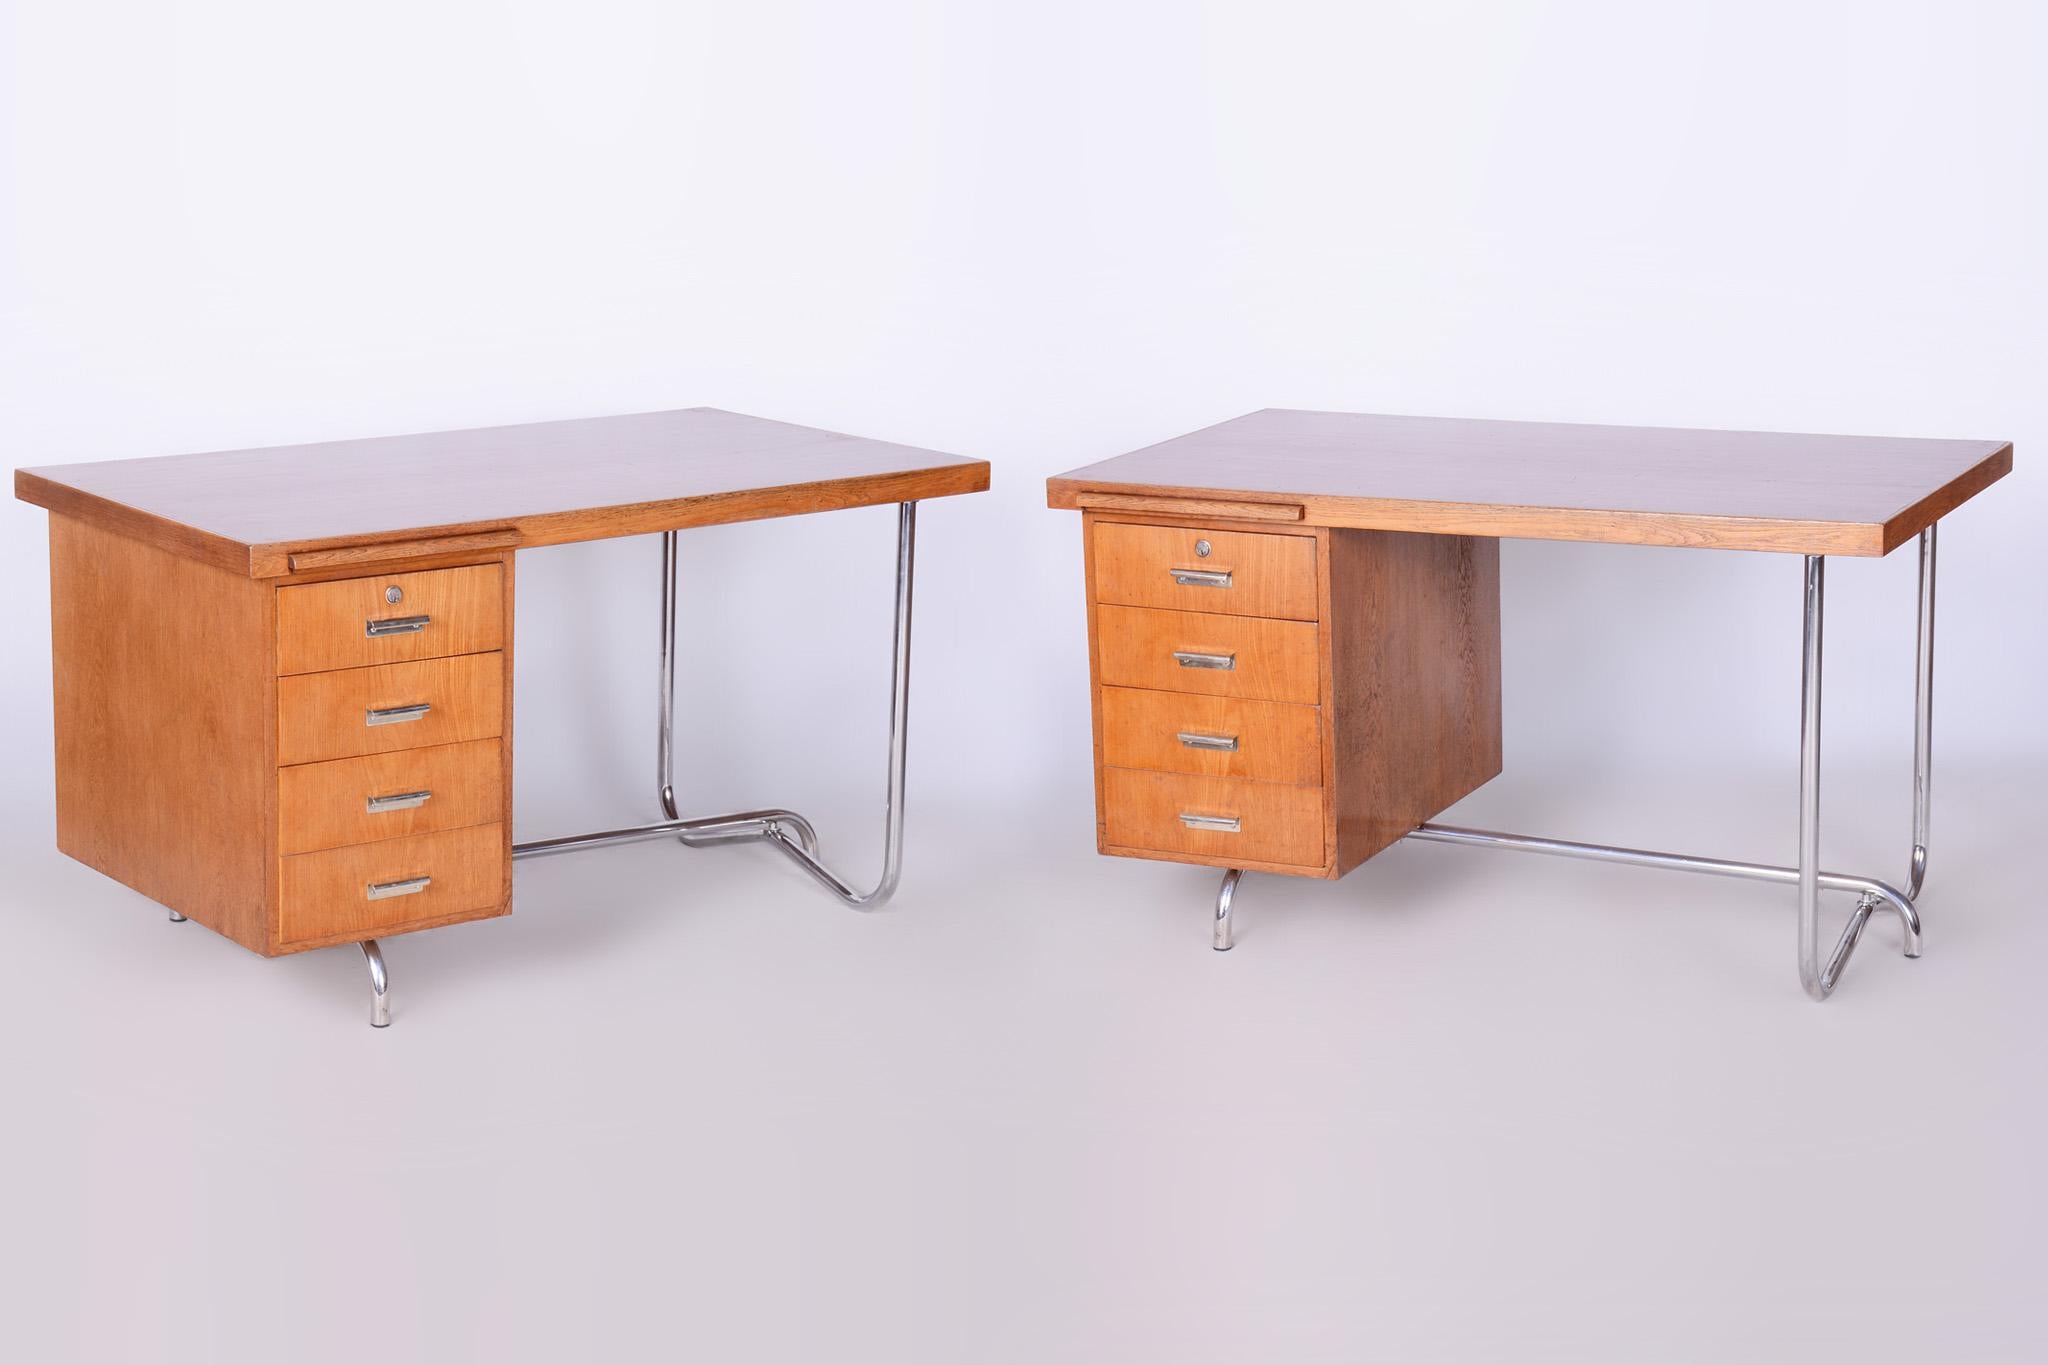 Restored Pair of Oak Writing Desks, Hynek Gottwald, Chrome, Czechia, 1930s For Sale 6